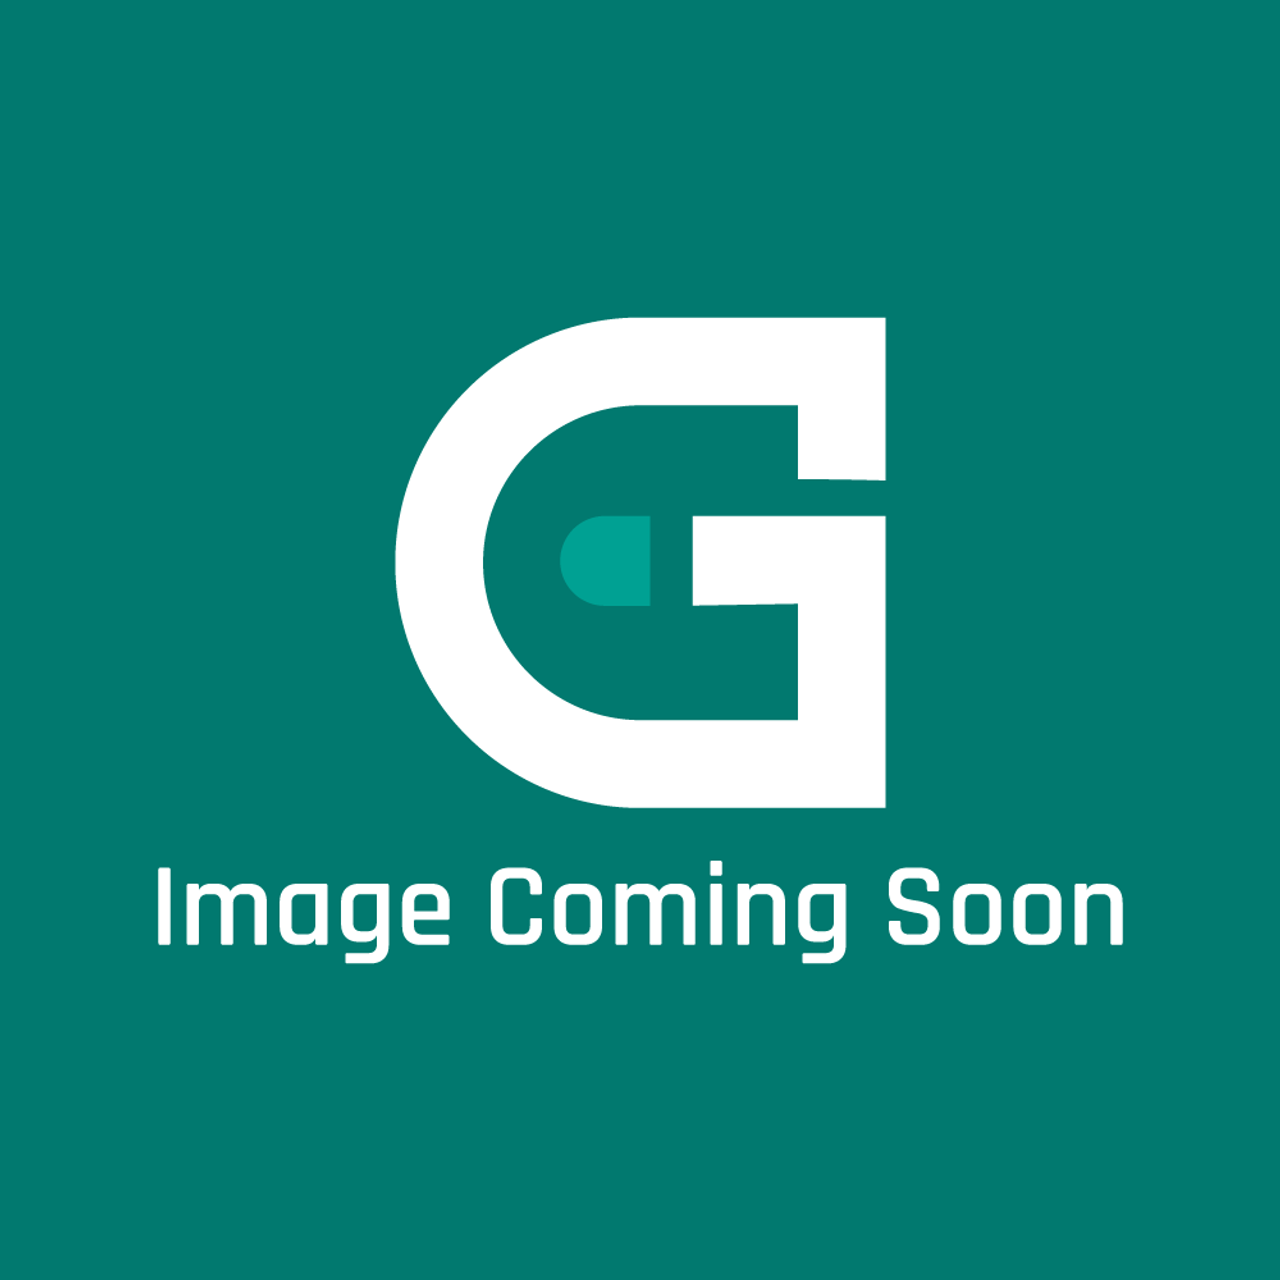 Vulcan Hart VH00-498460-0000A - Rrg Grease Chute Assembl Y - Image Coming Soon!